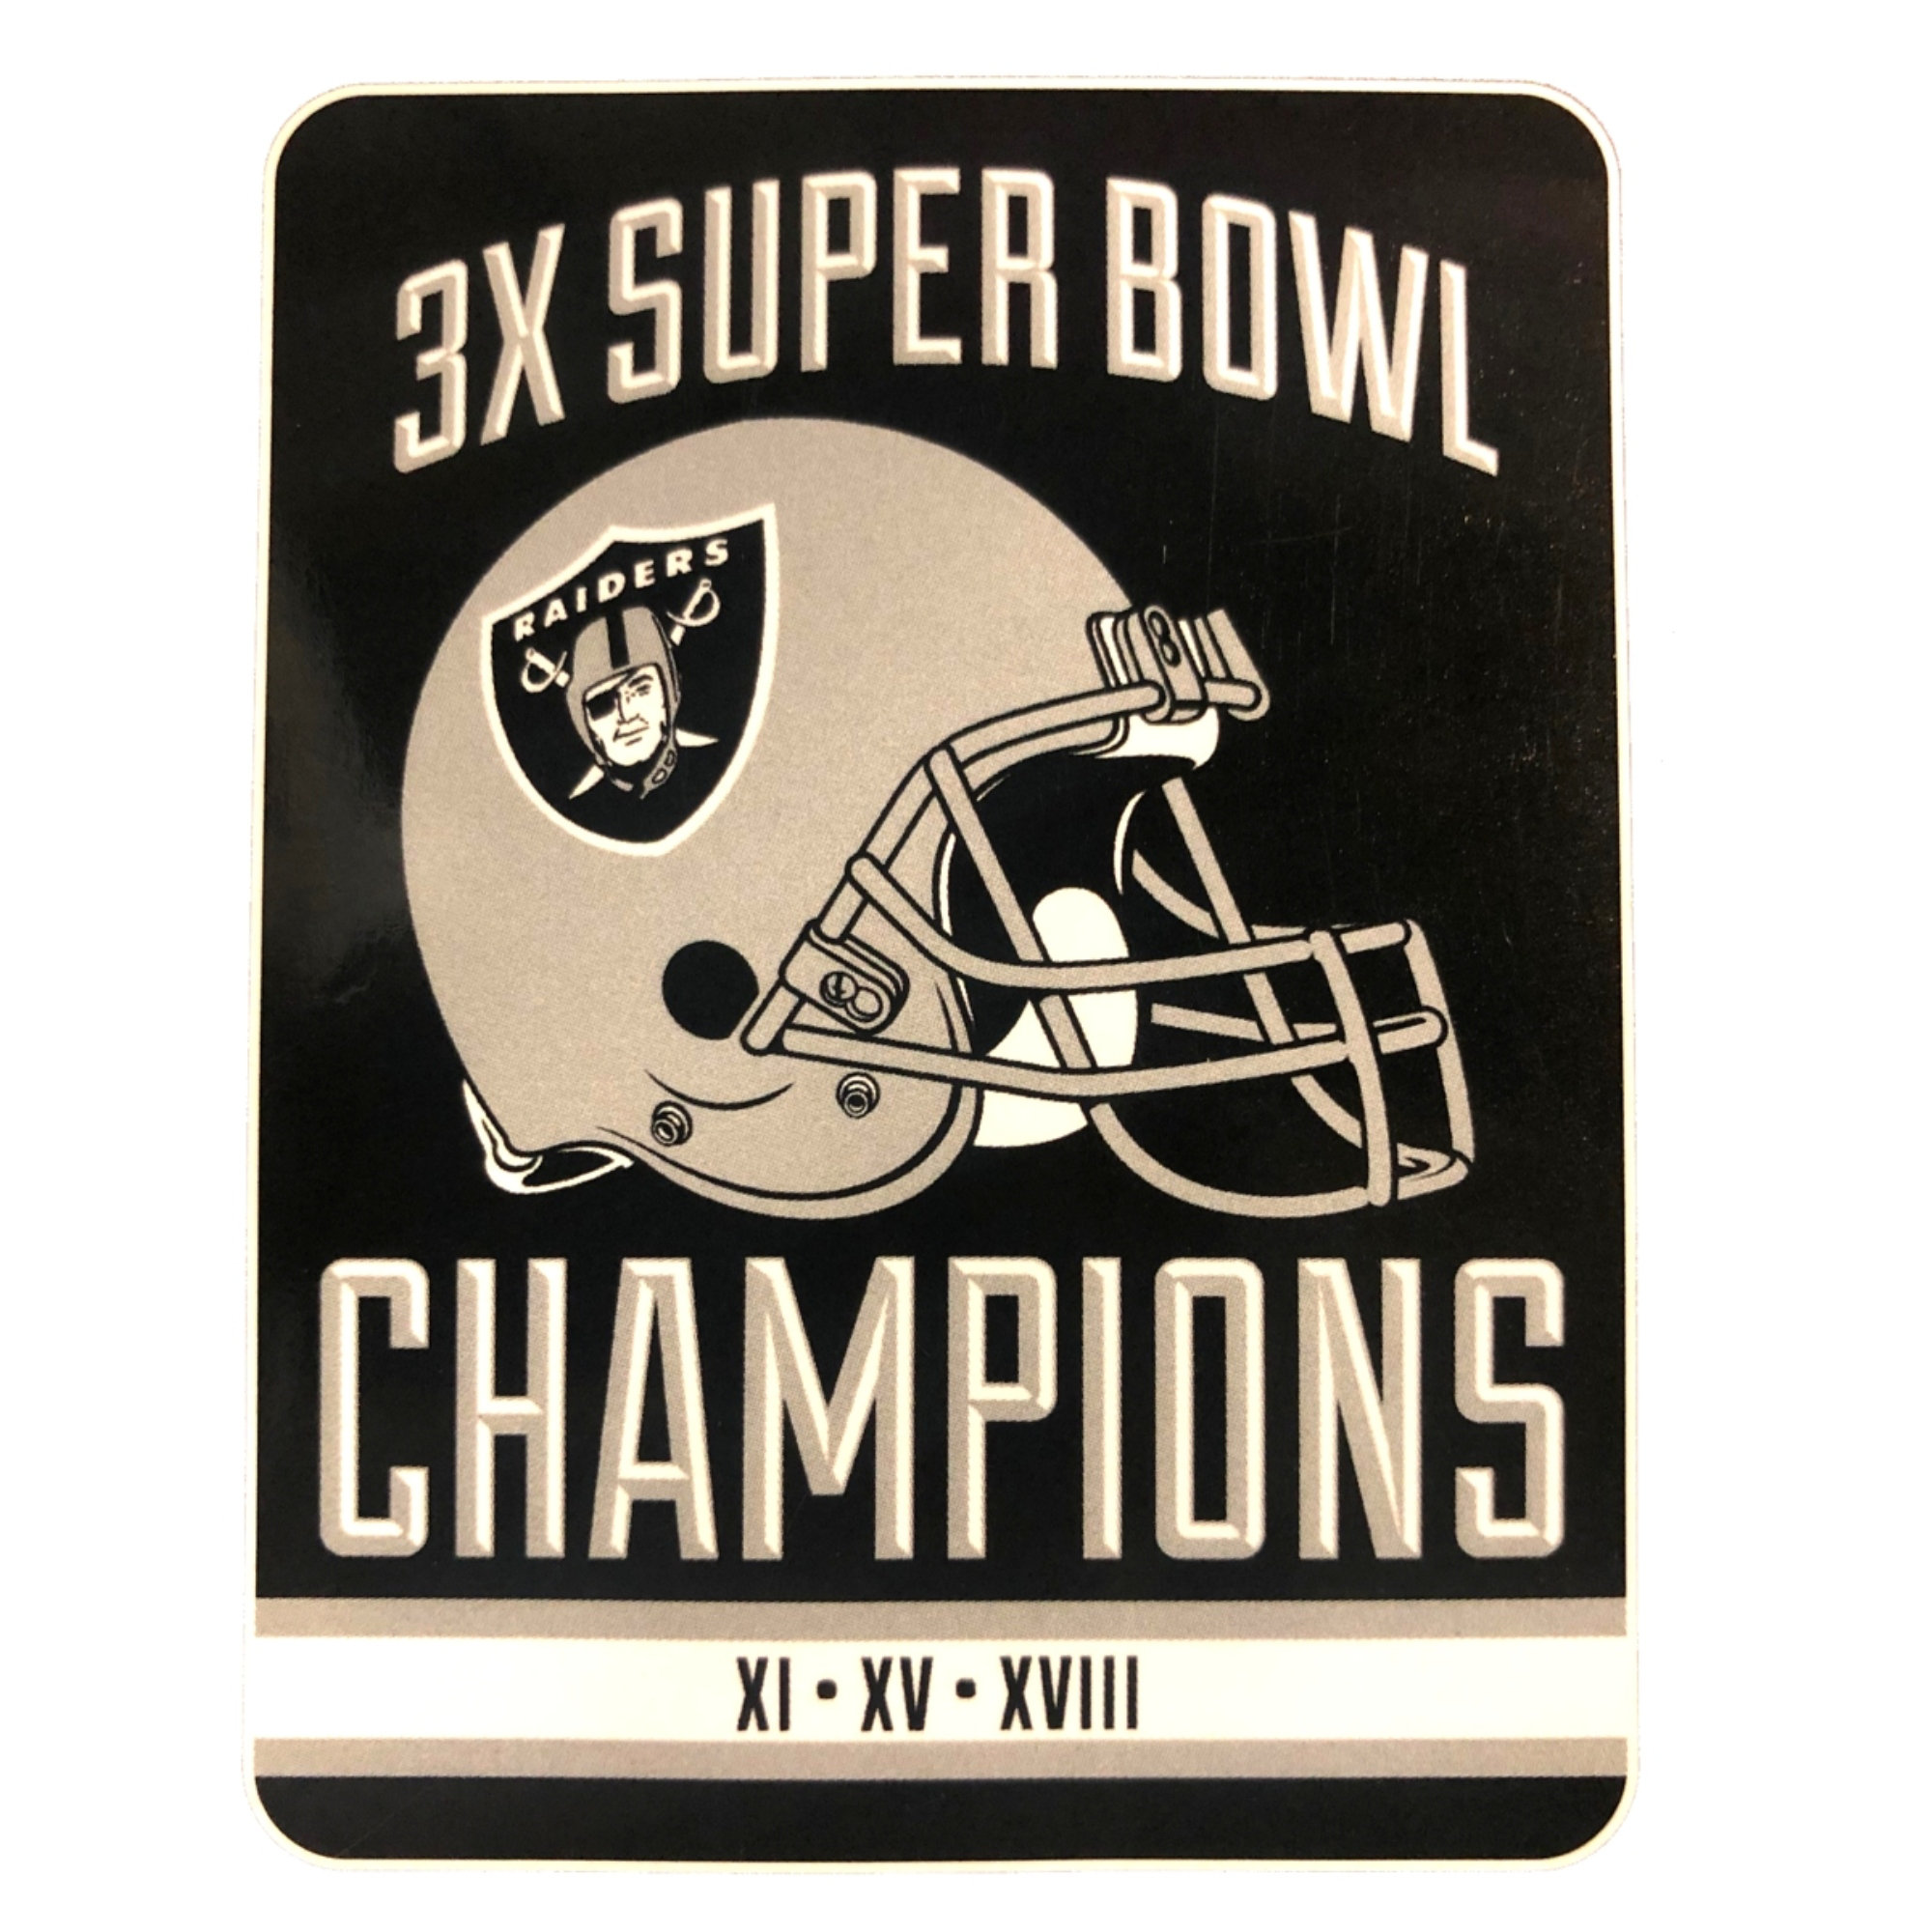 NFL Superbowl Champs Plush Throw - San Francisco 49ers